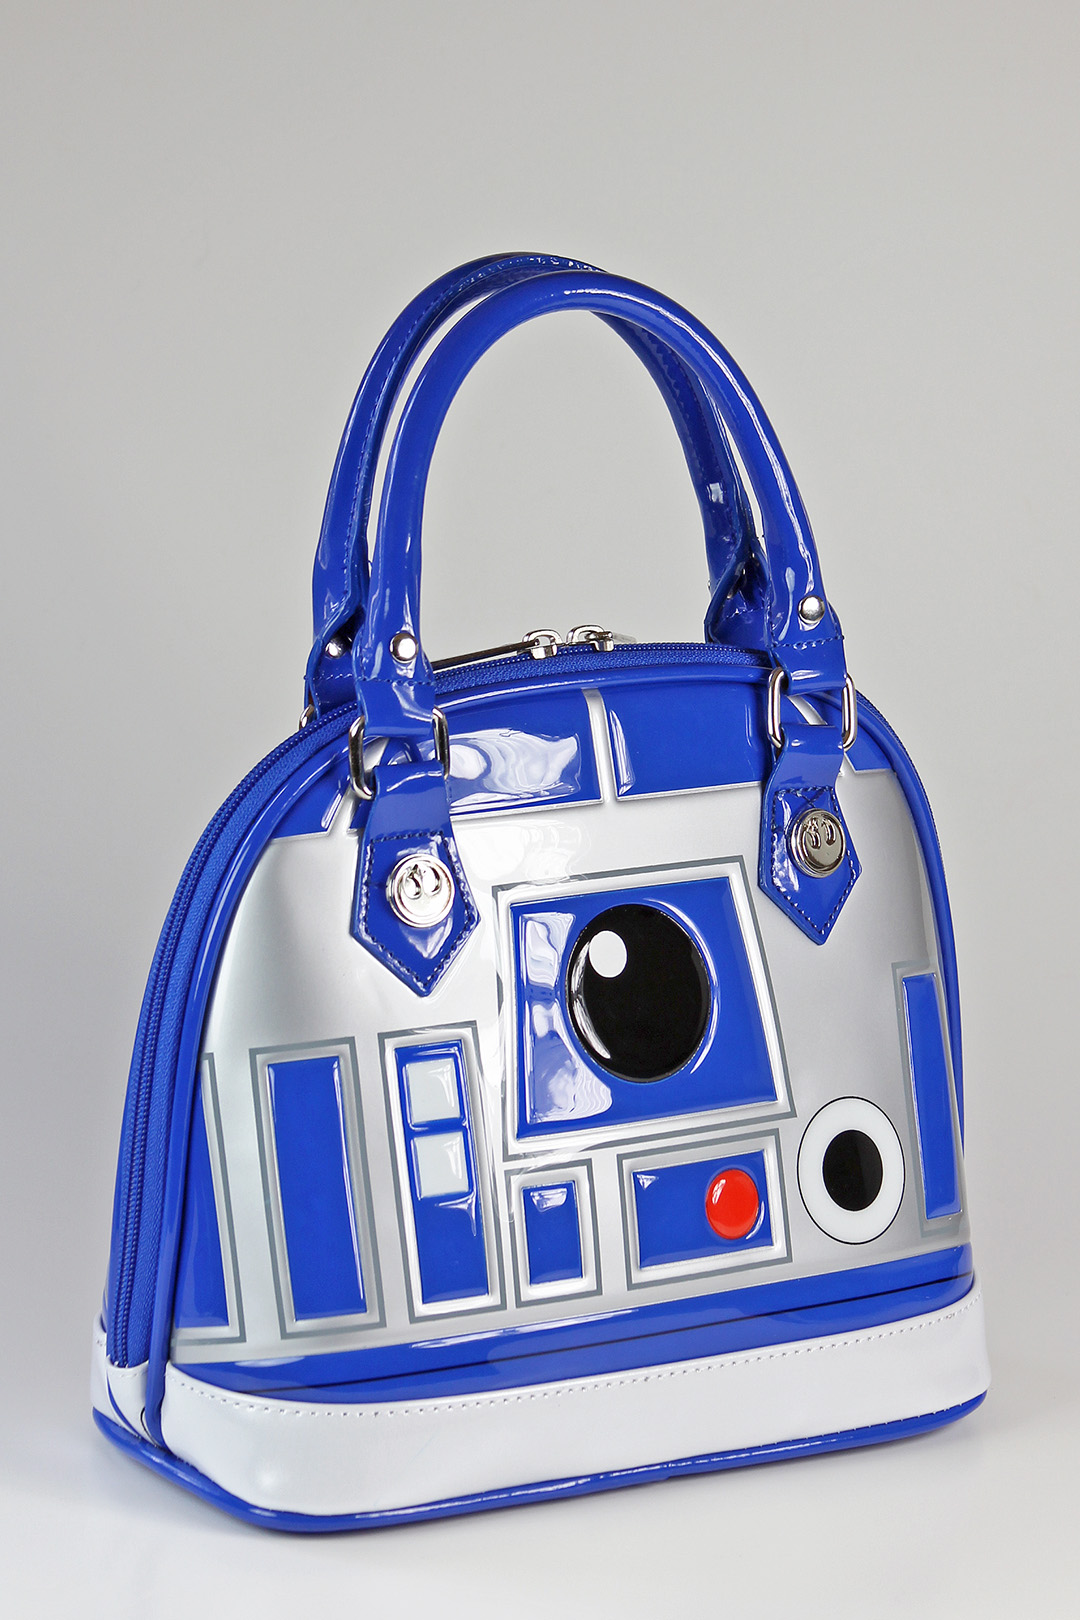 Loungefly - R2-D2 handbag (front)